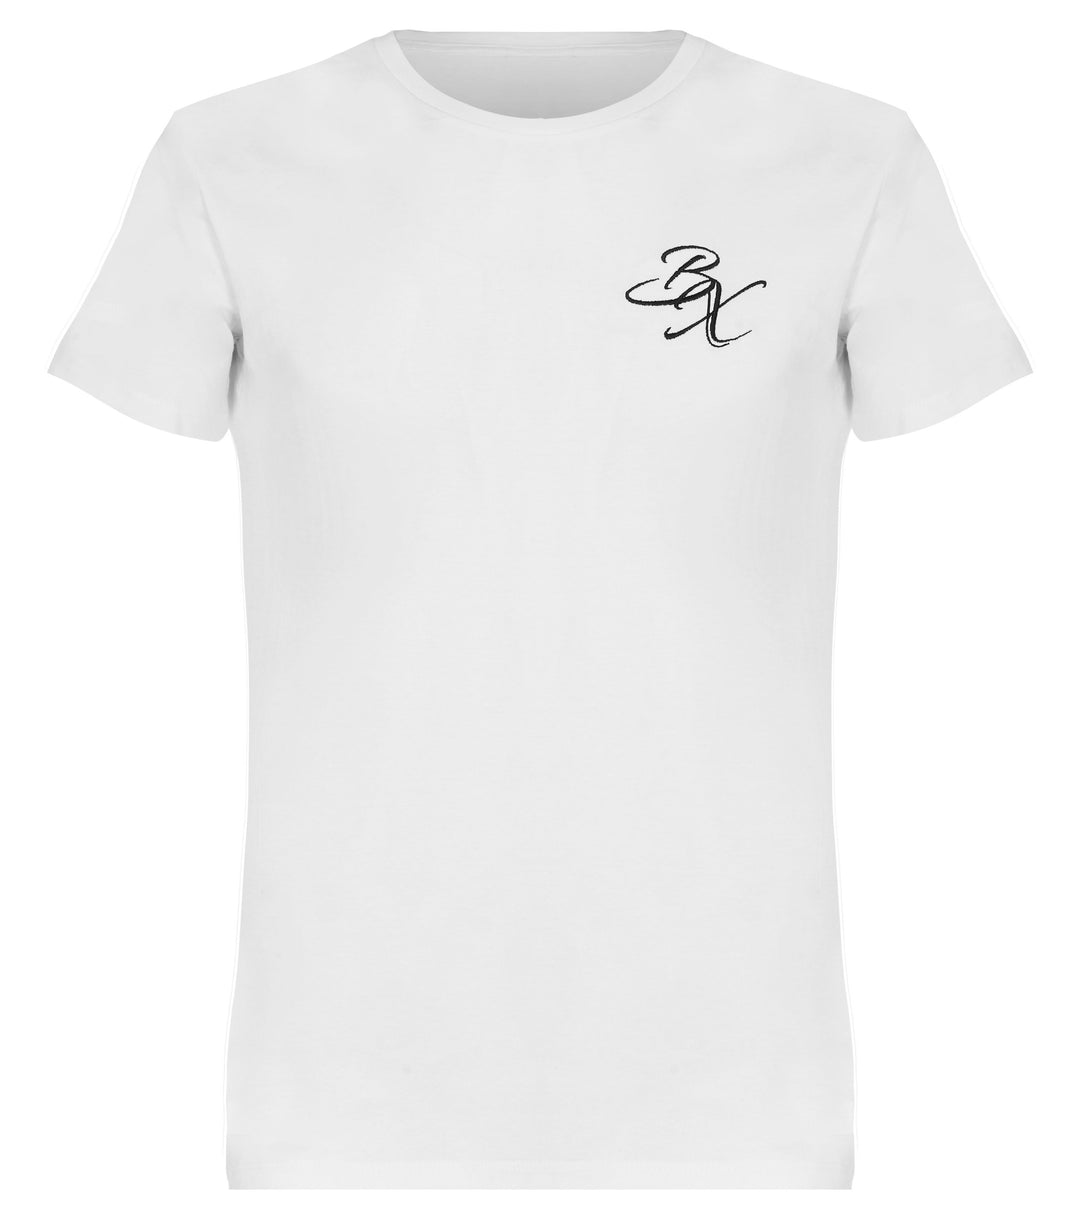 BX Original Slim Fit T-shirt - White - Adapt Avenue